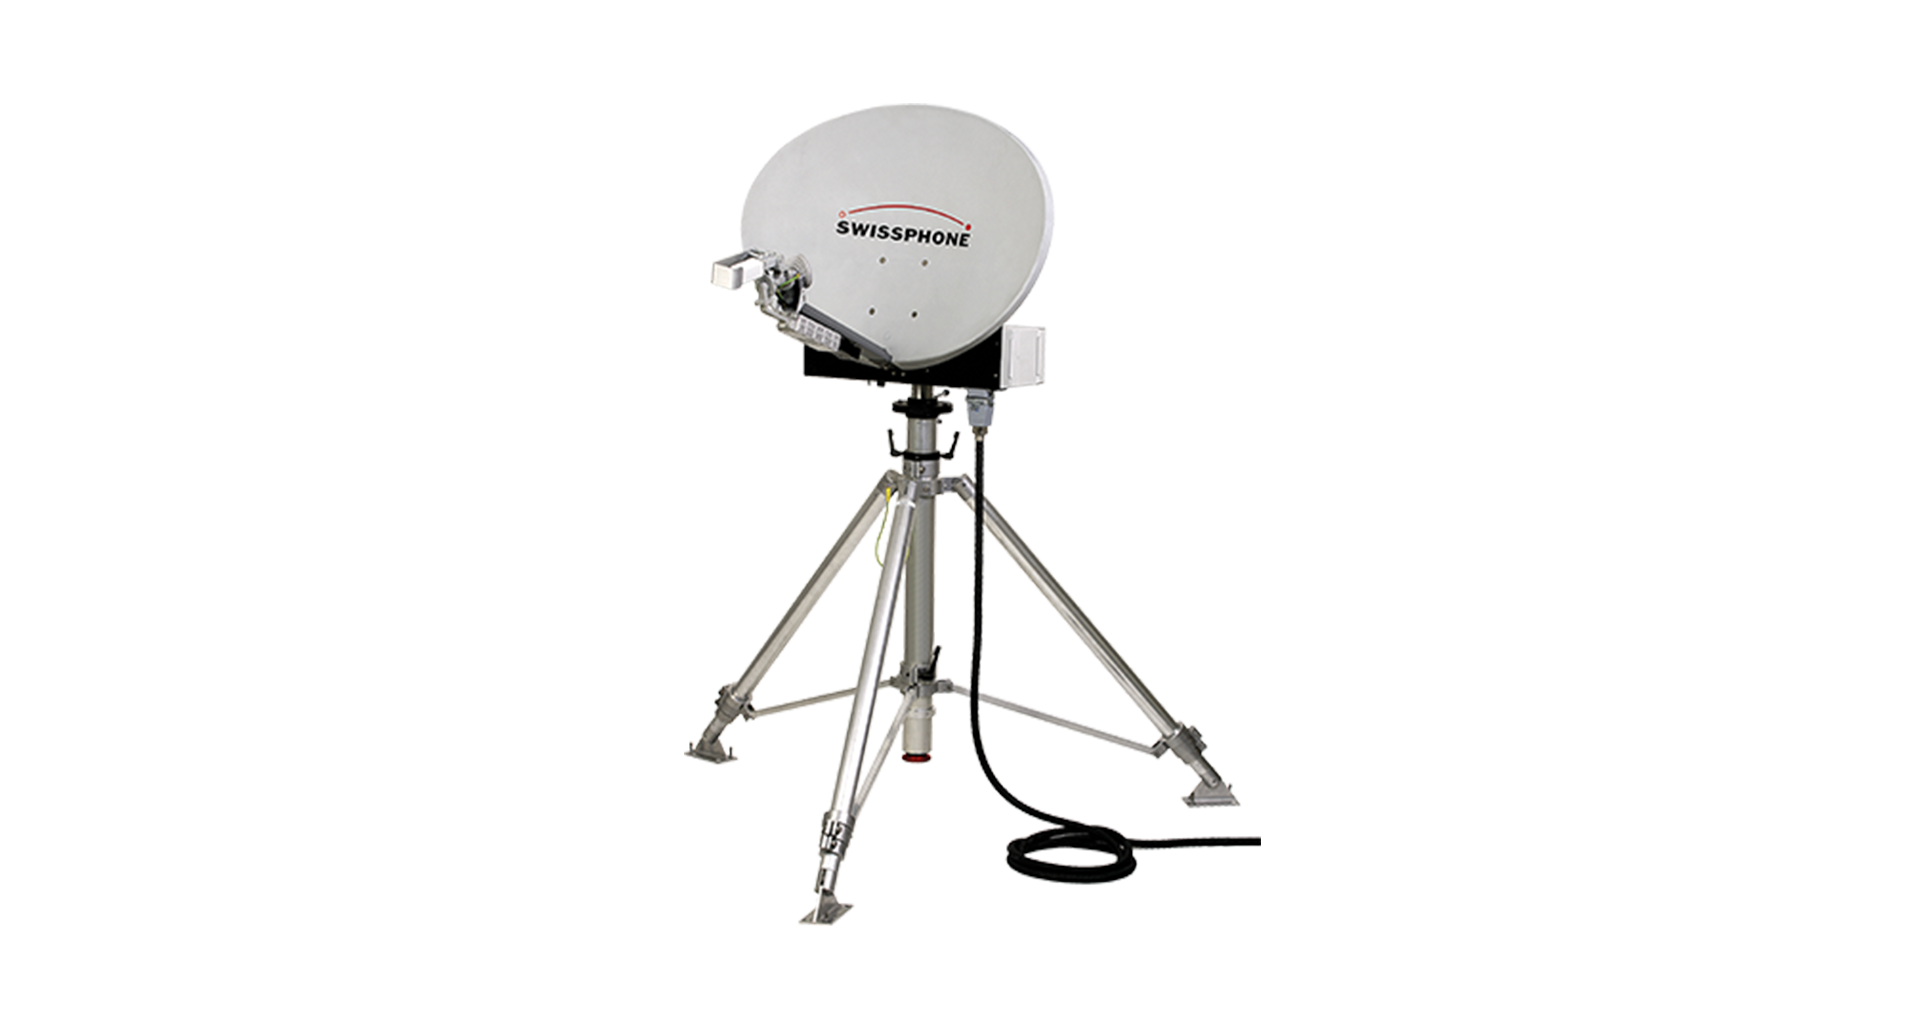 Satellite-Based Communication System